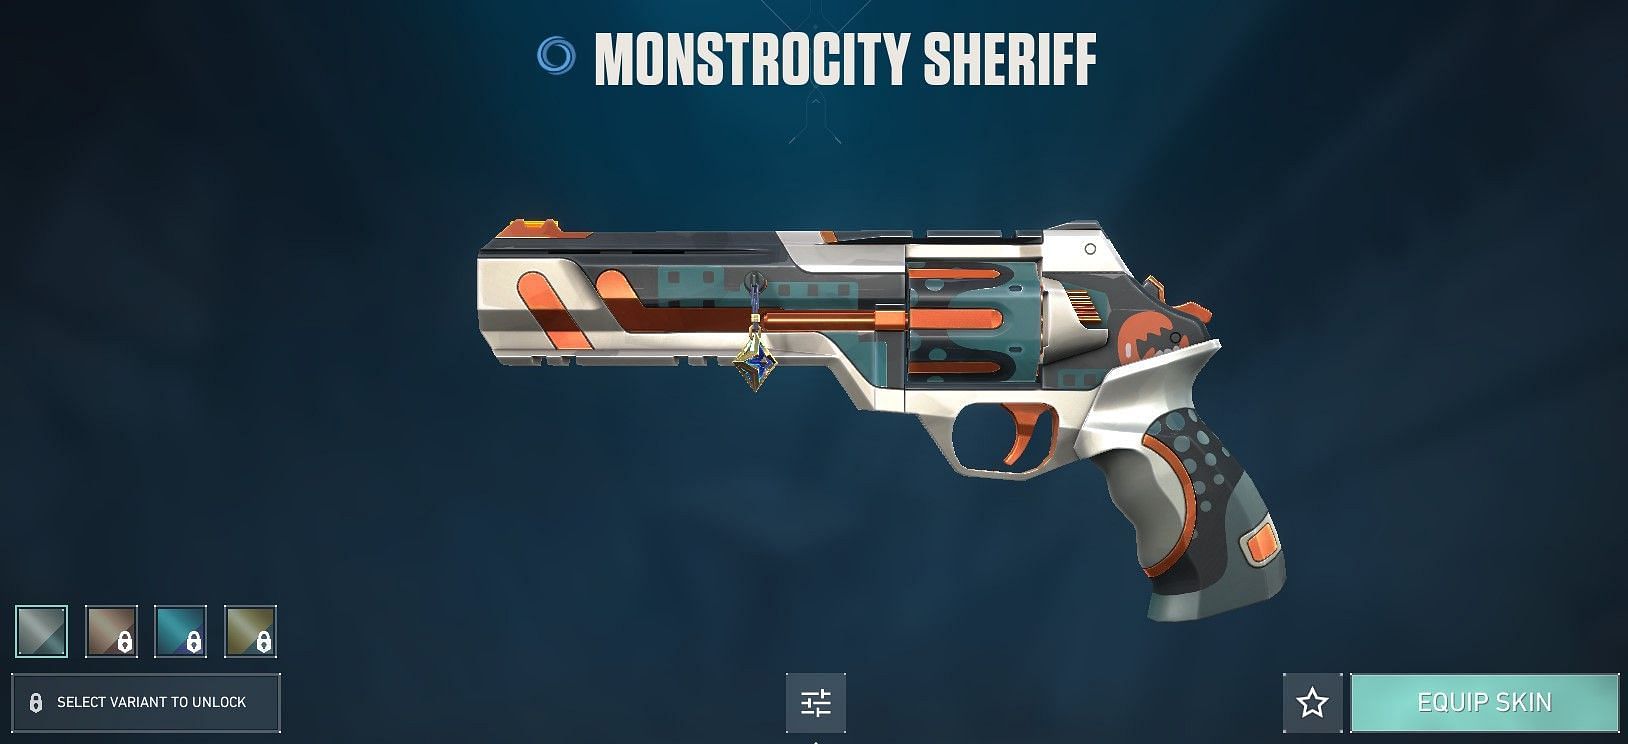 Monstrocity Sheriff (Image via Riot Games)